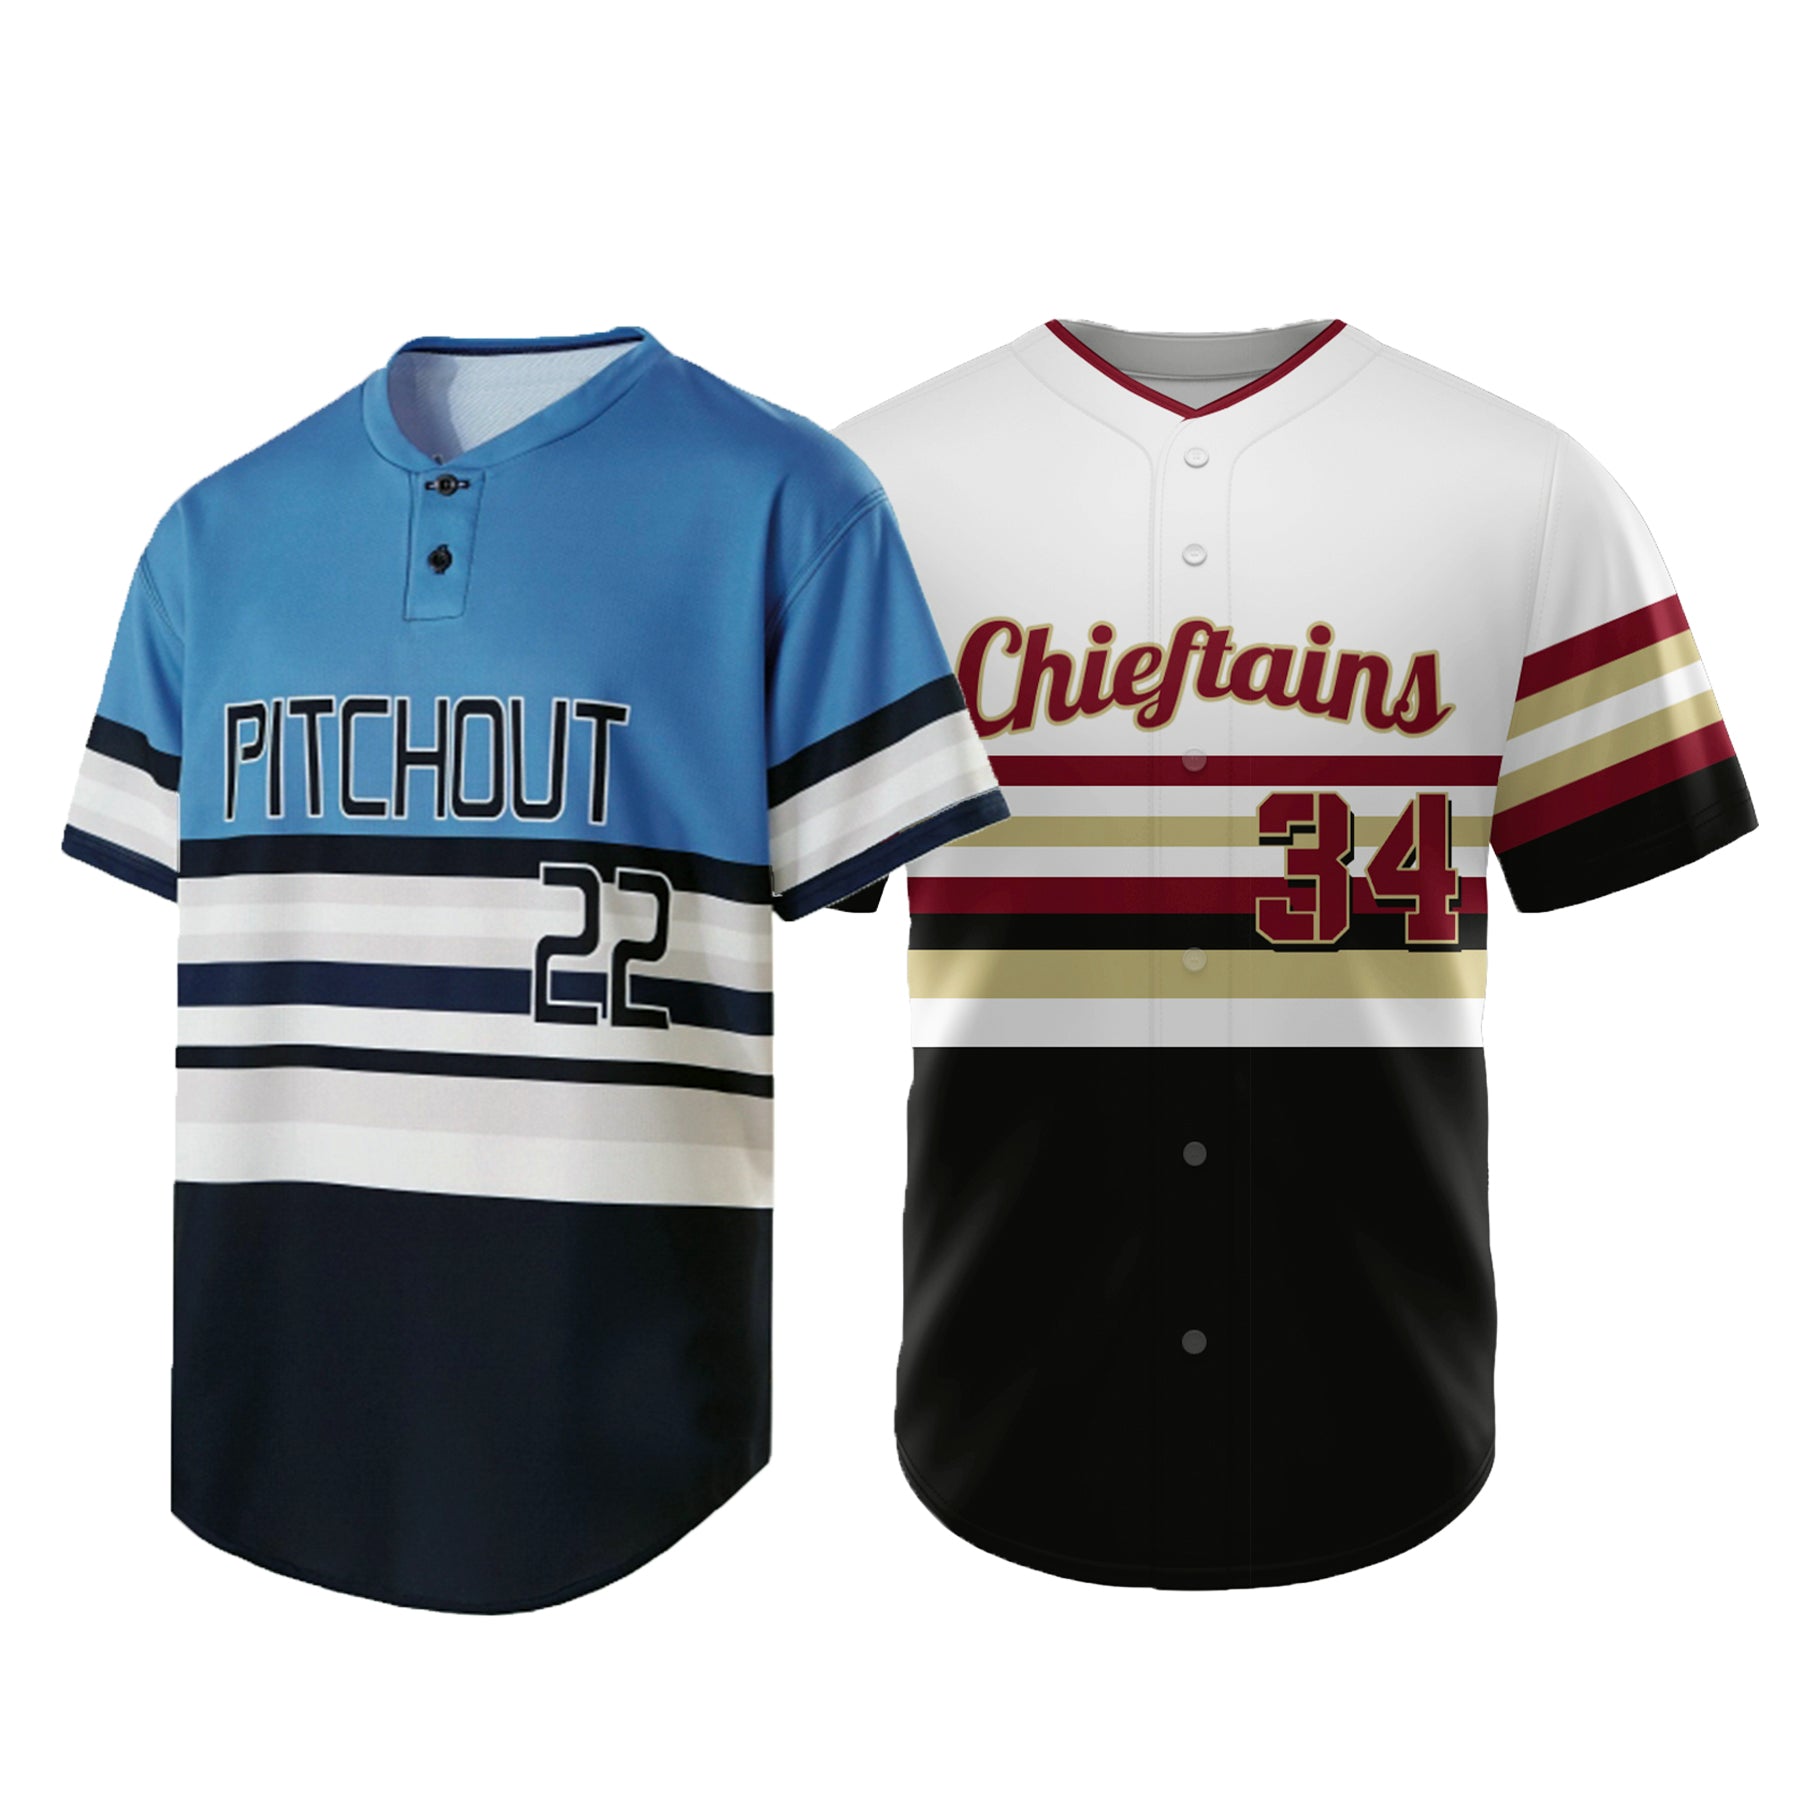 Custom Baseball Uniform - Made in America